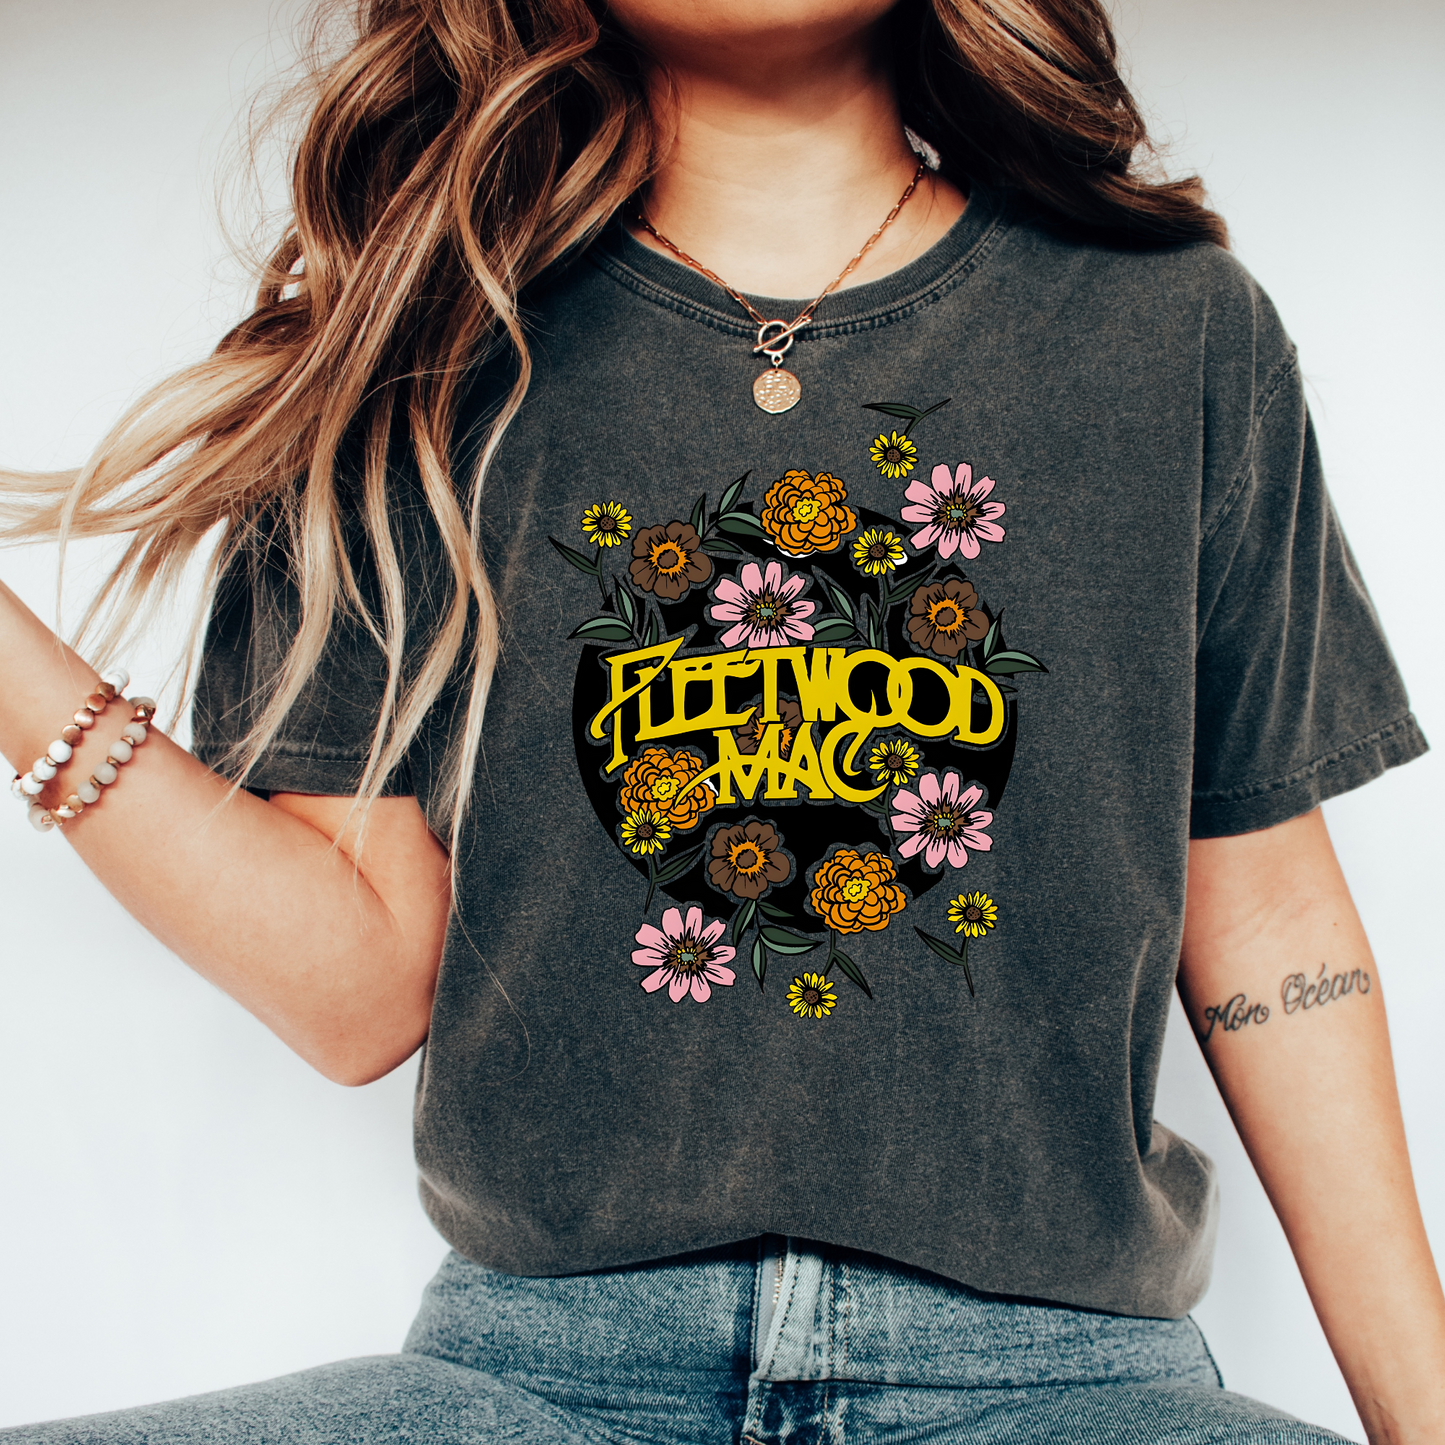 Fleetwood t-shirt | Adult unisex t-shirt | Rumours t-shirt